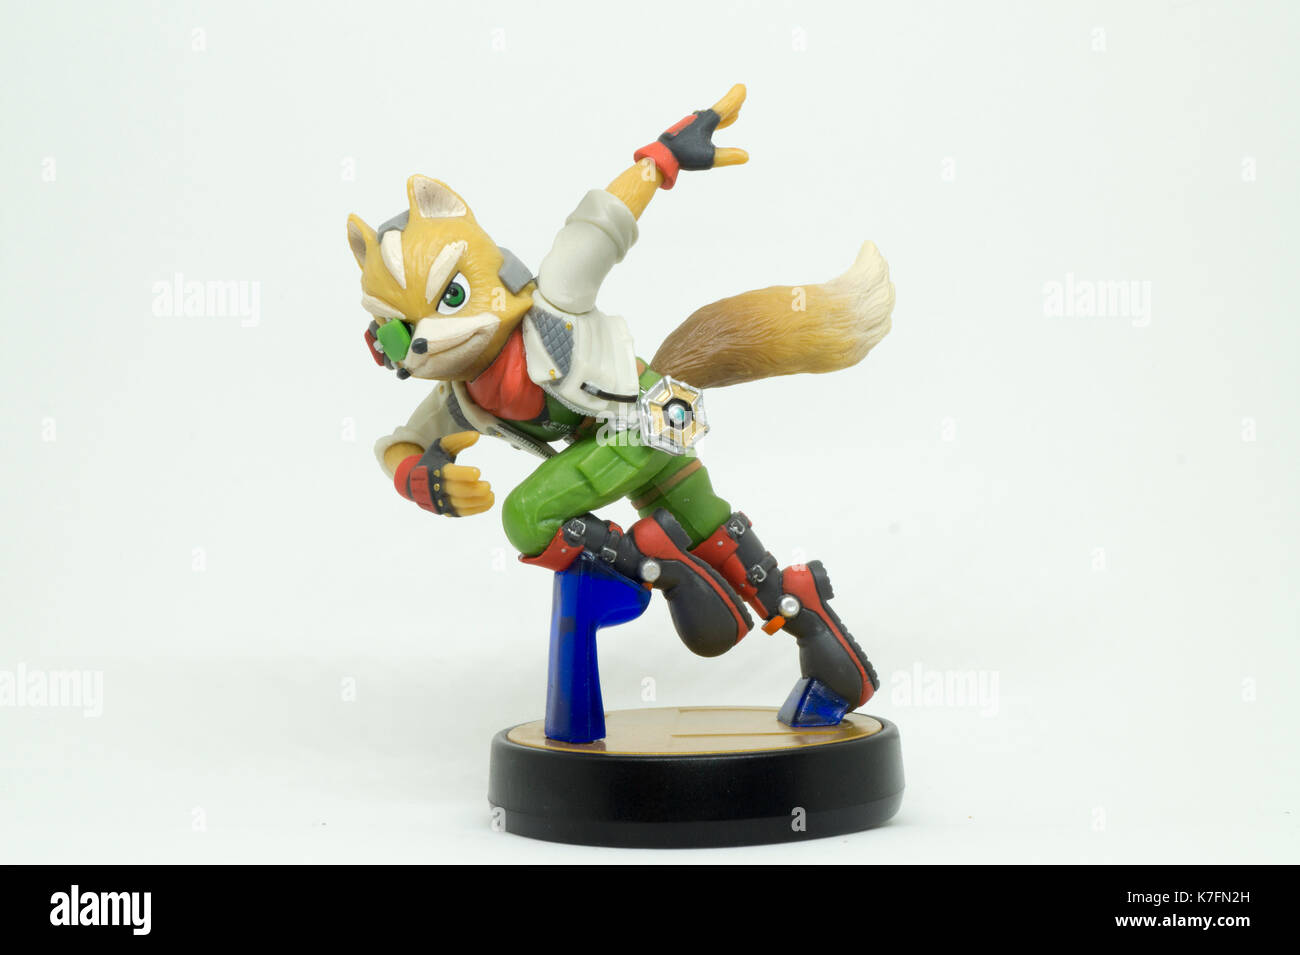 Nintendo Super Smash Bros Amiibo Collection Figure Fox McCloud Star Fox  Stock Photo - Alamy